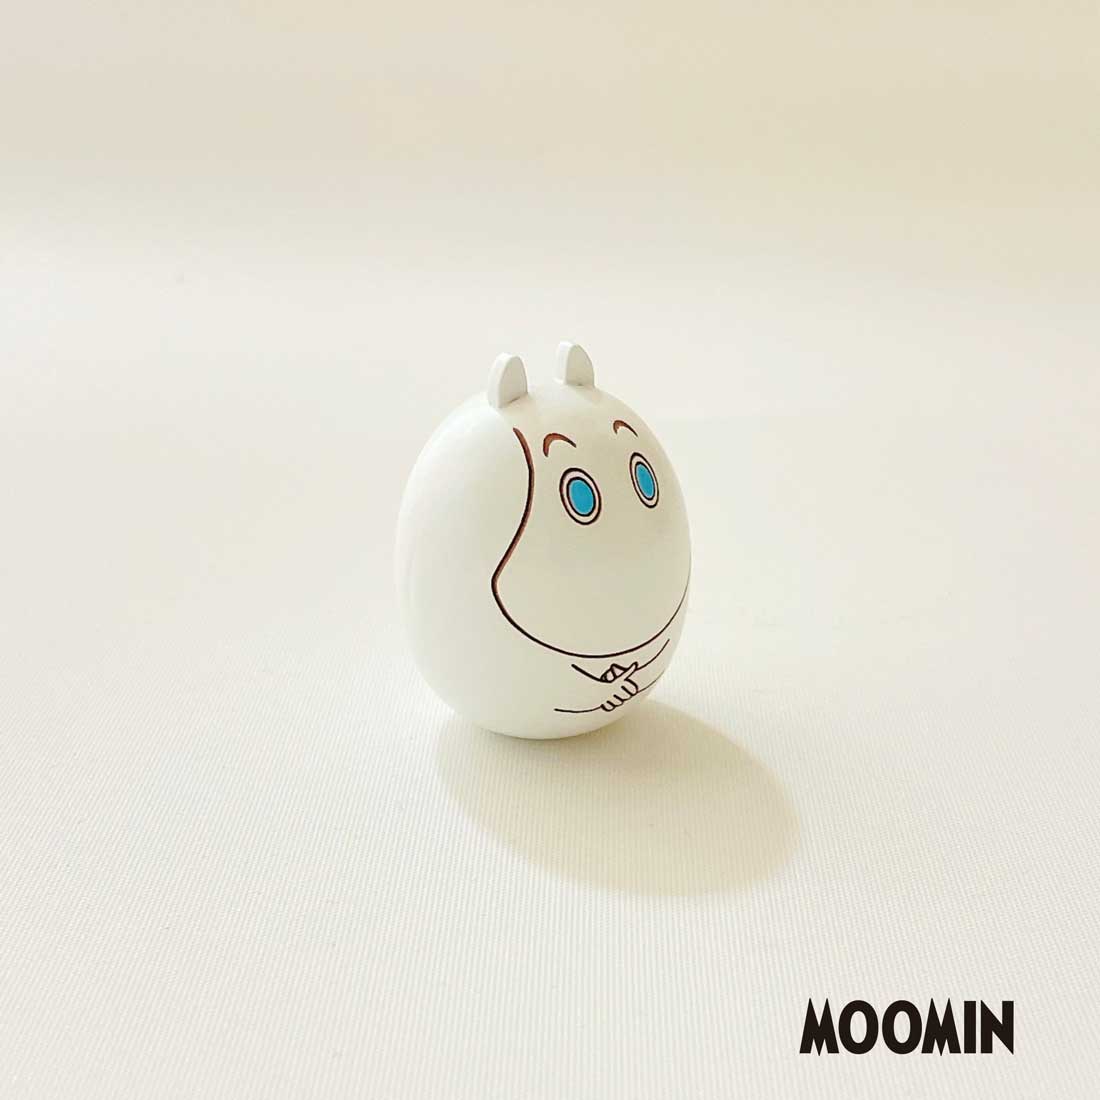 Moomin S